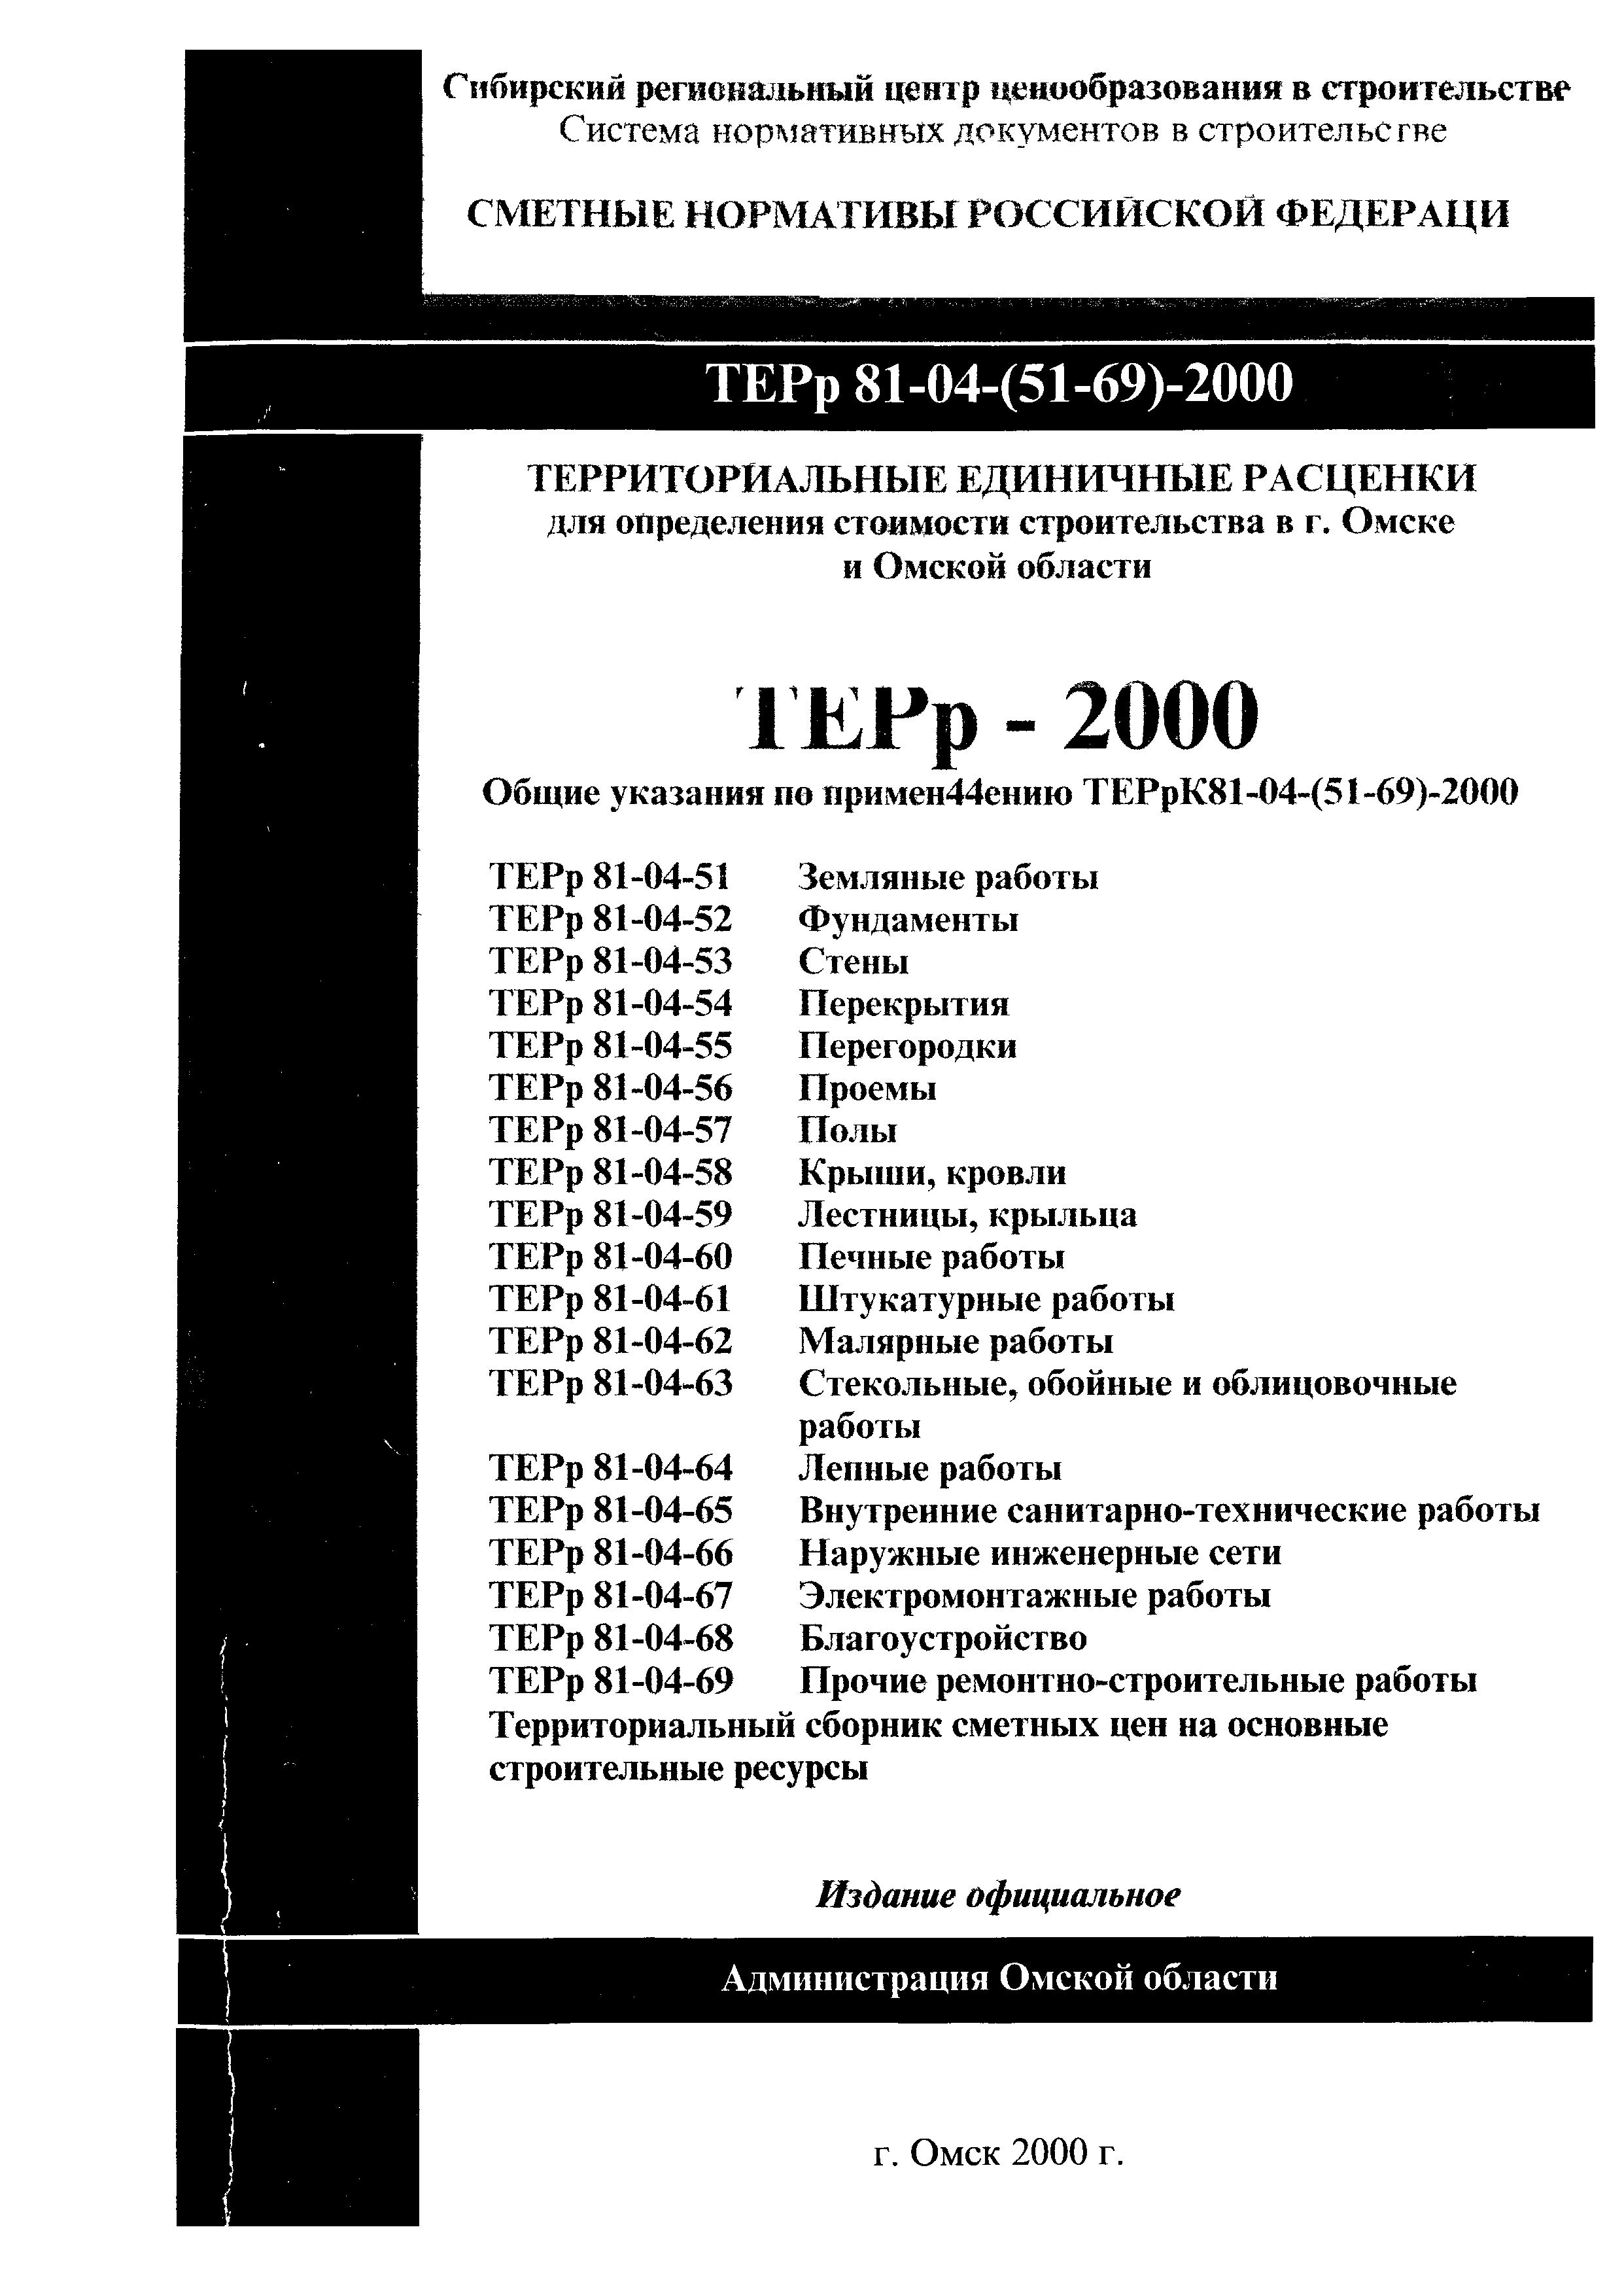 ТЕРр Омской области 2000-54